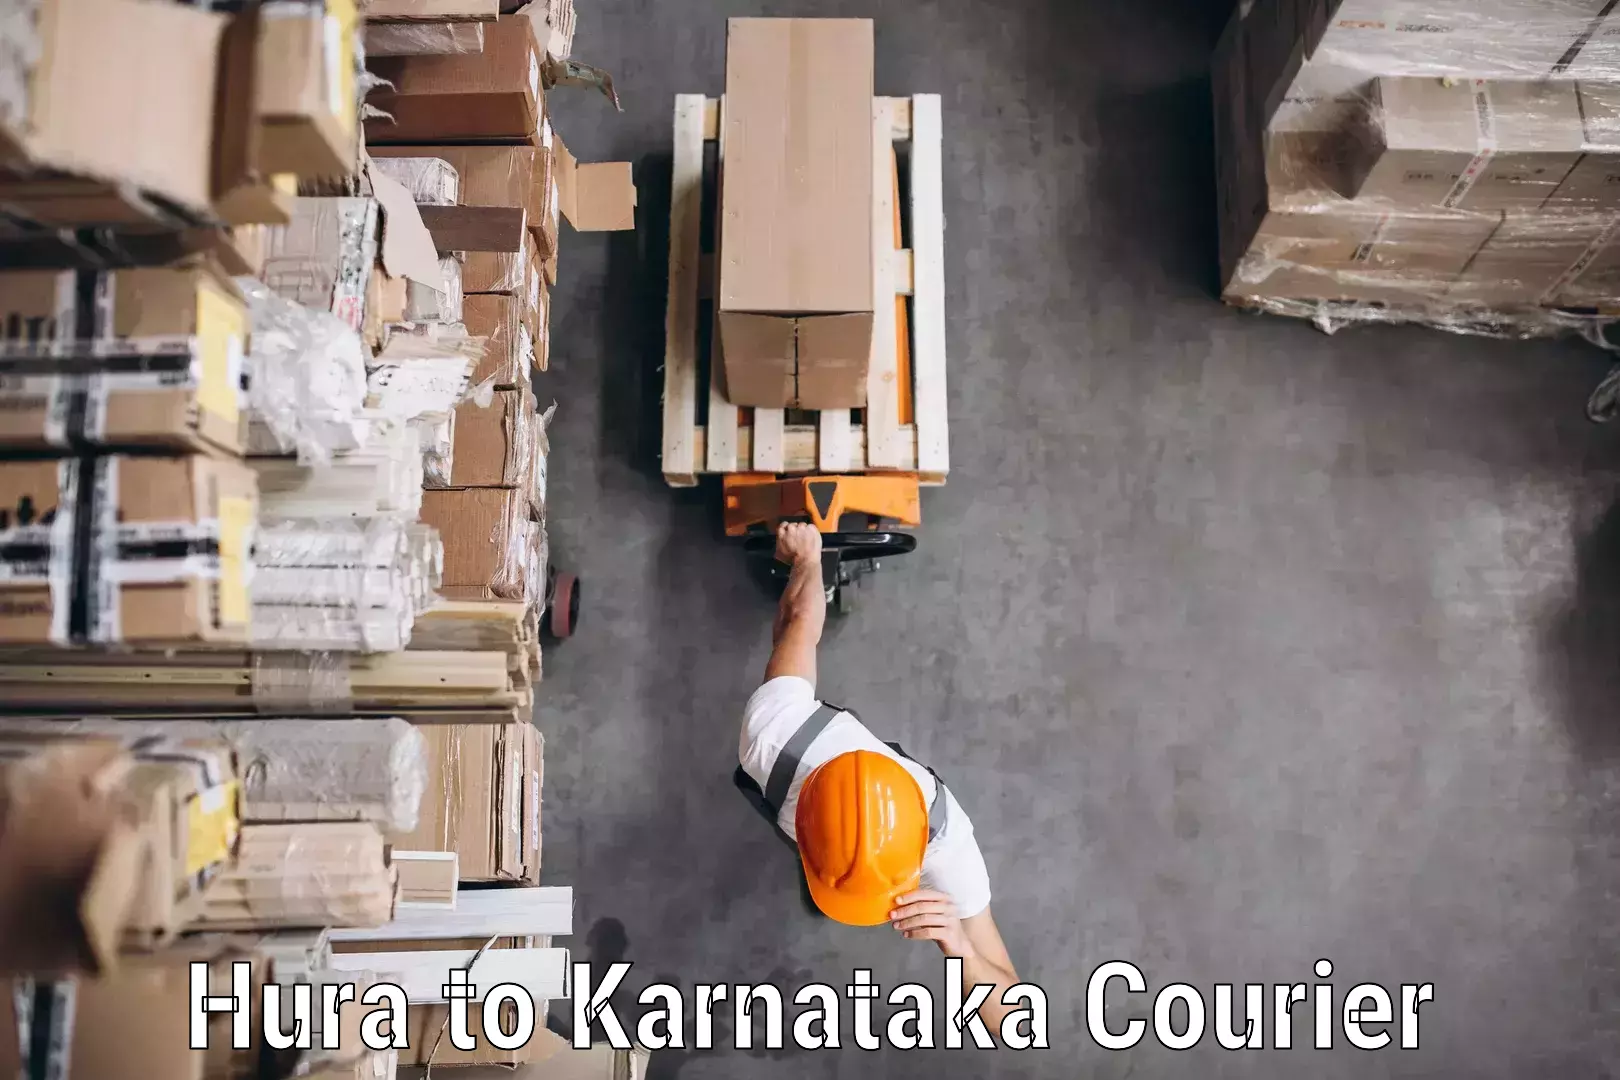 Delivery service partnership Hura to Karnataka